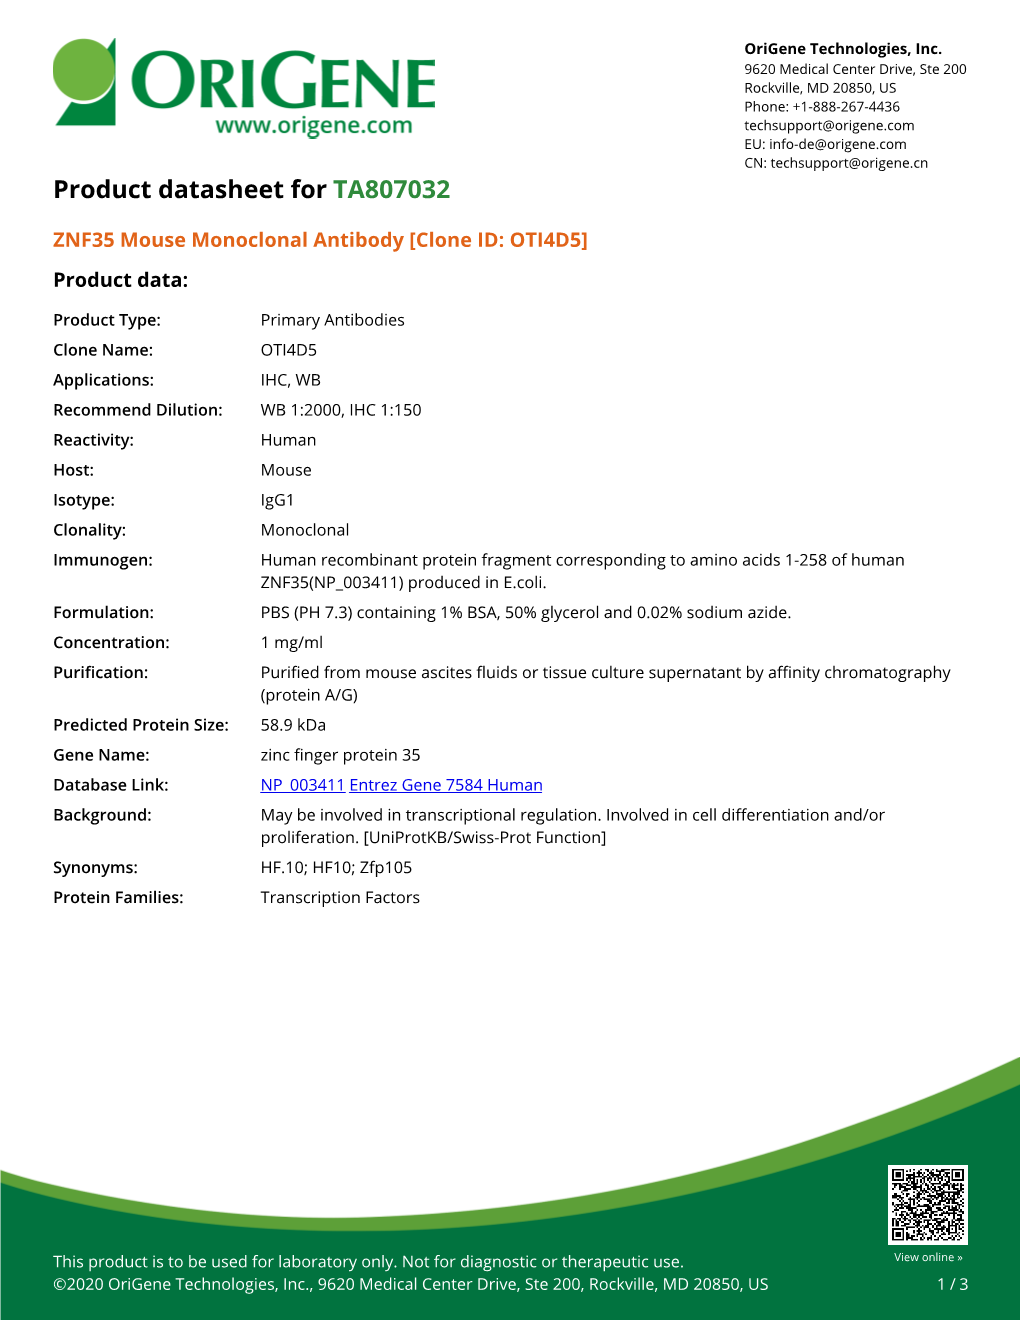 ZNF35 Mouse Monoclonal Antibody [Clone ID: OTI4D5] – TA807032